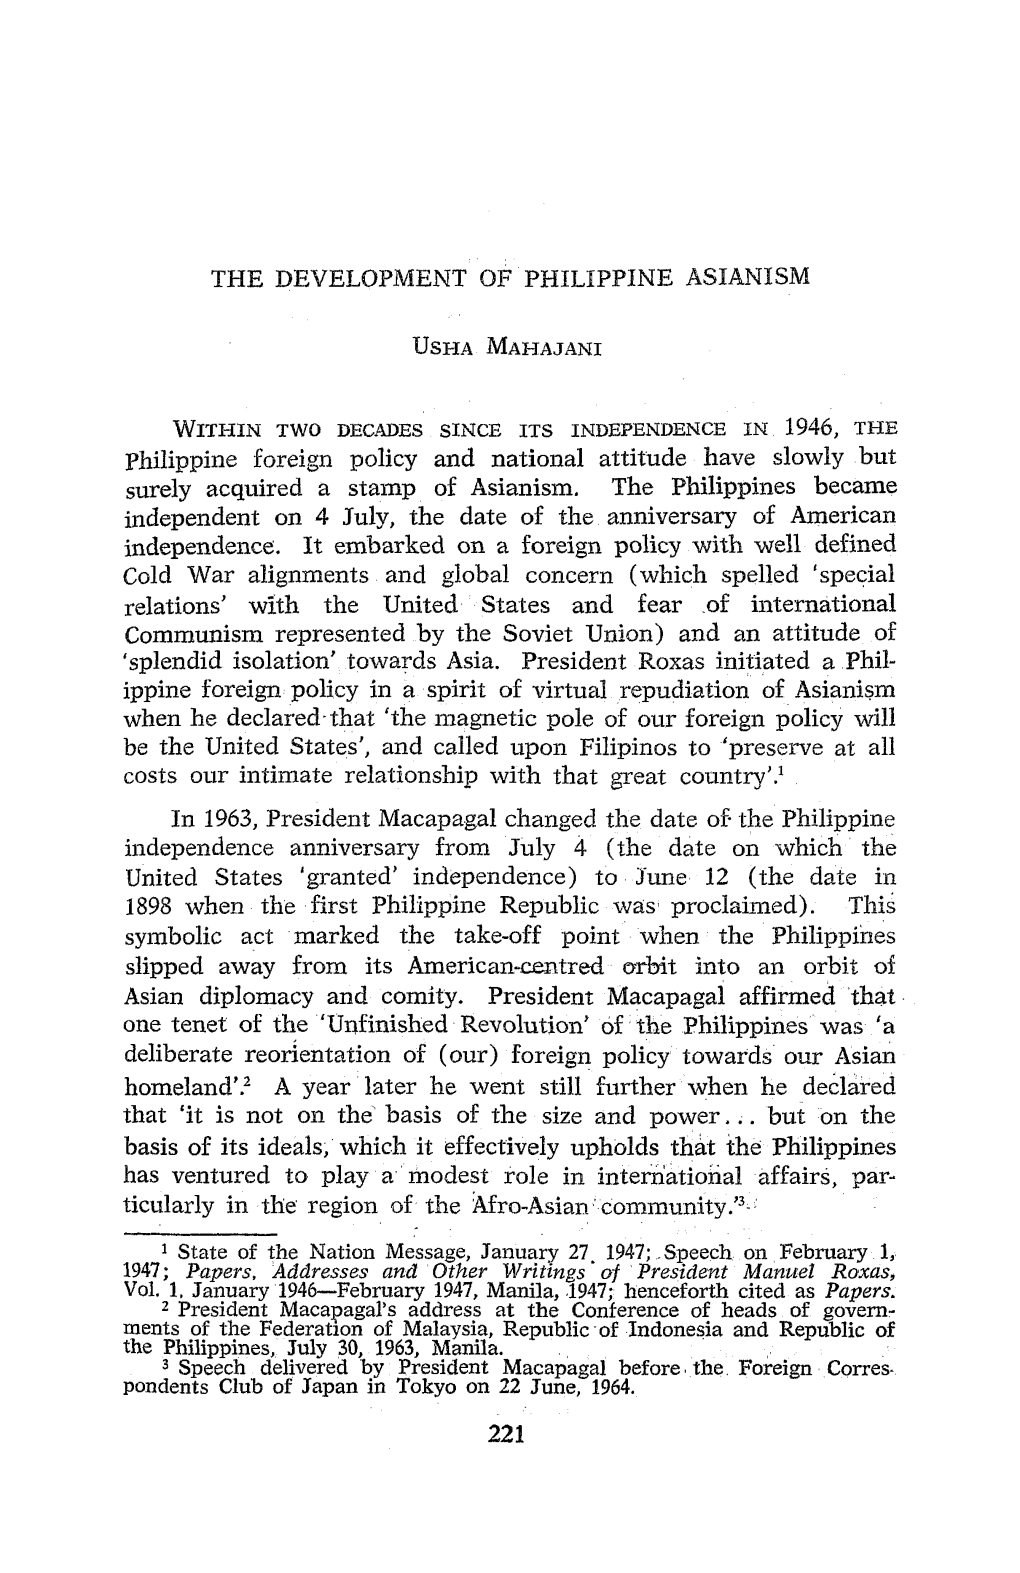 The Development of Philippine Asianism